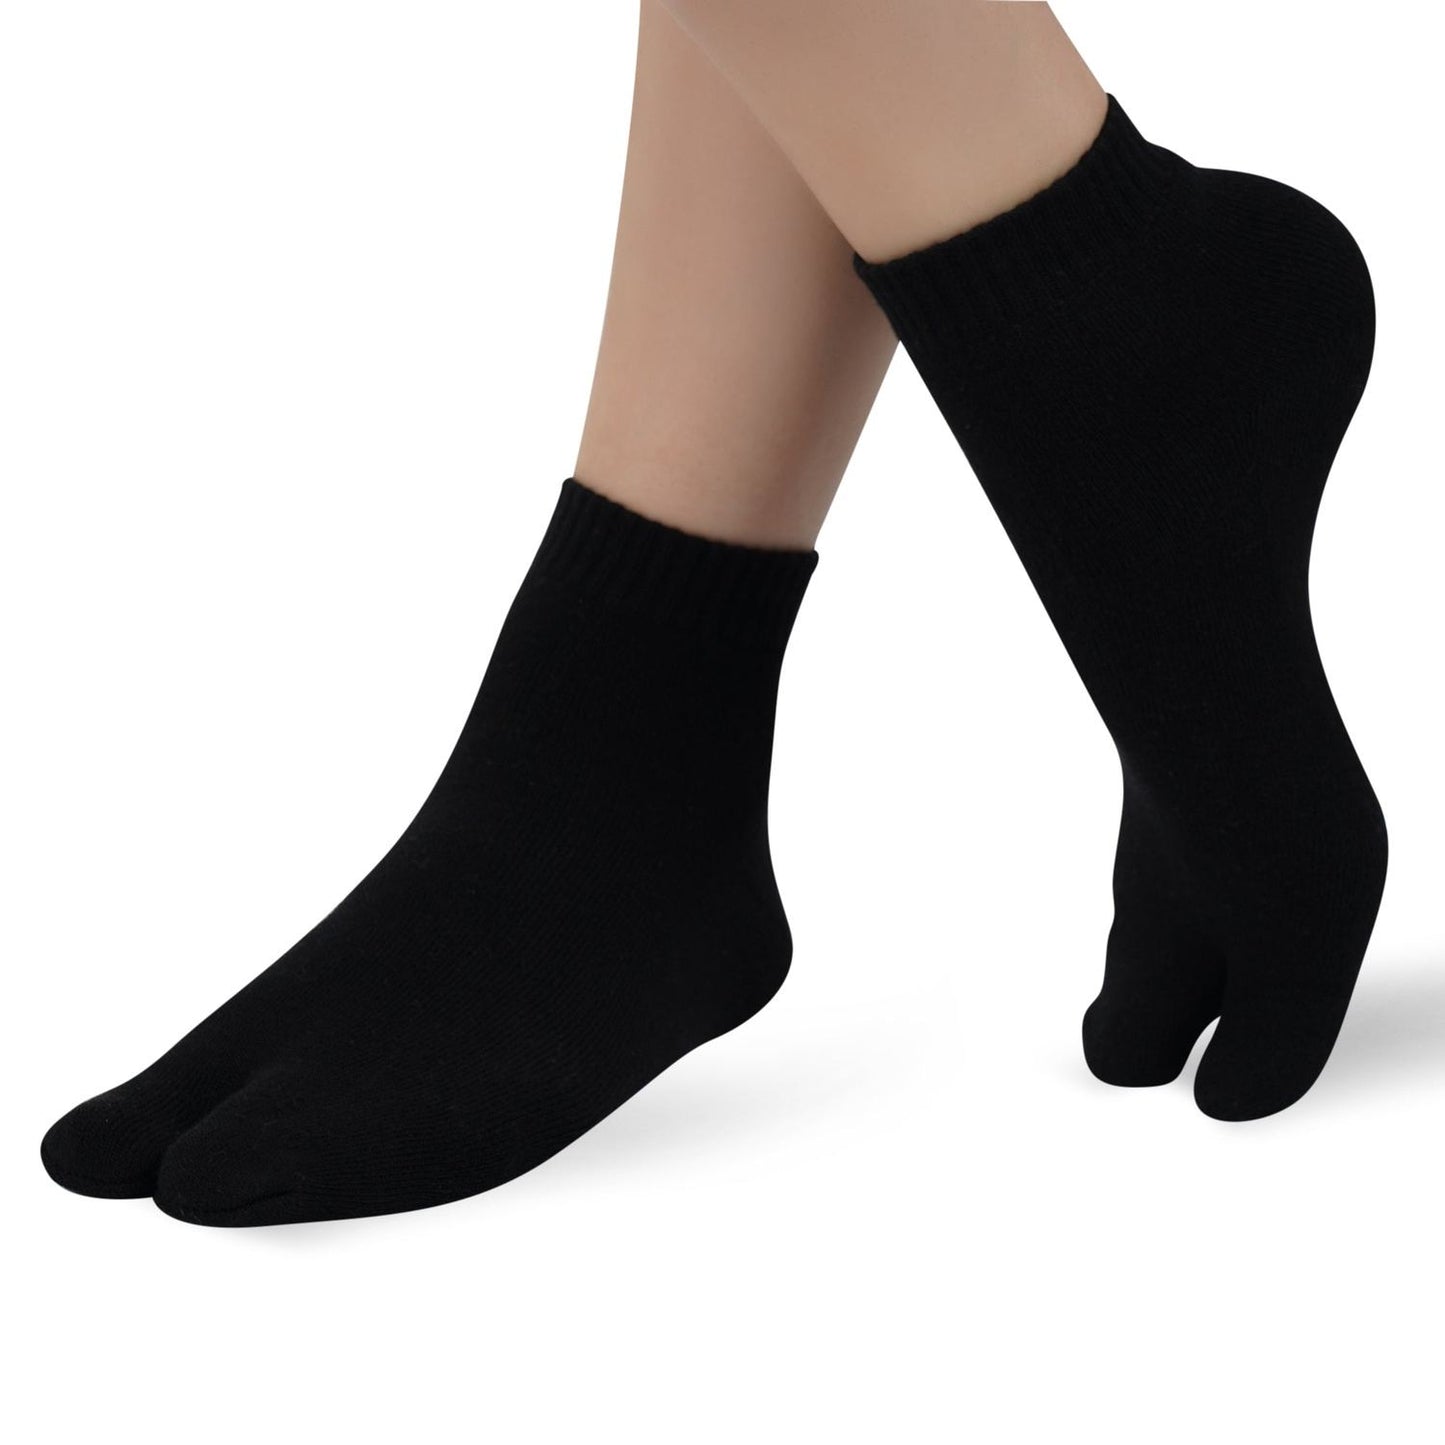 Terry Thumb Socks - Black